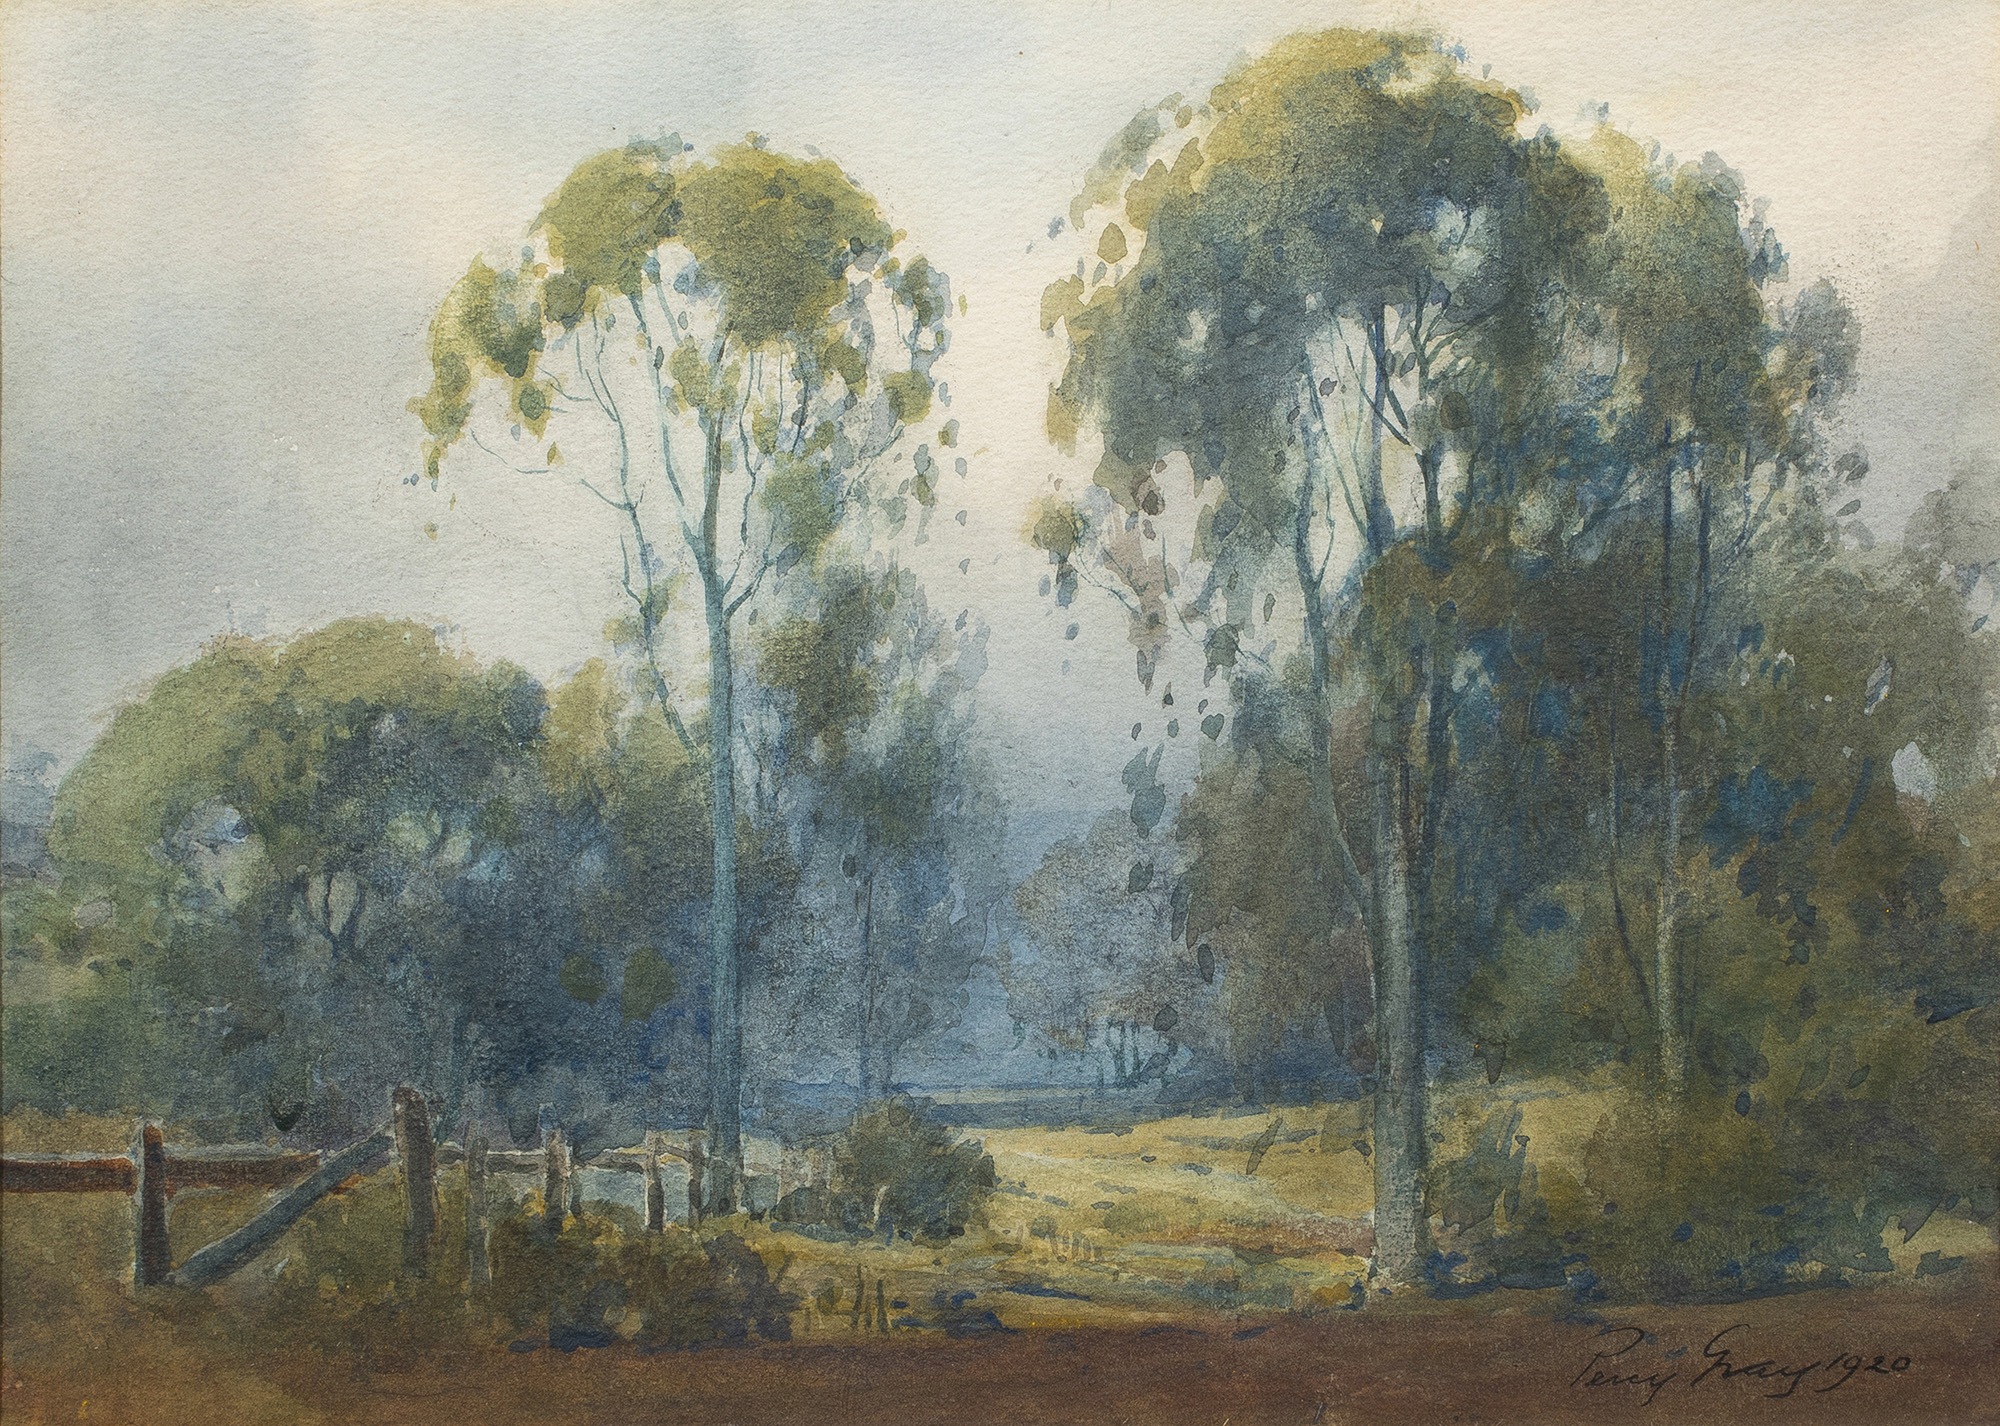 Percy Gray, Eucalyptus Trees along the Wooden Fence.